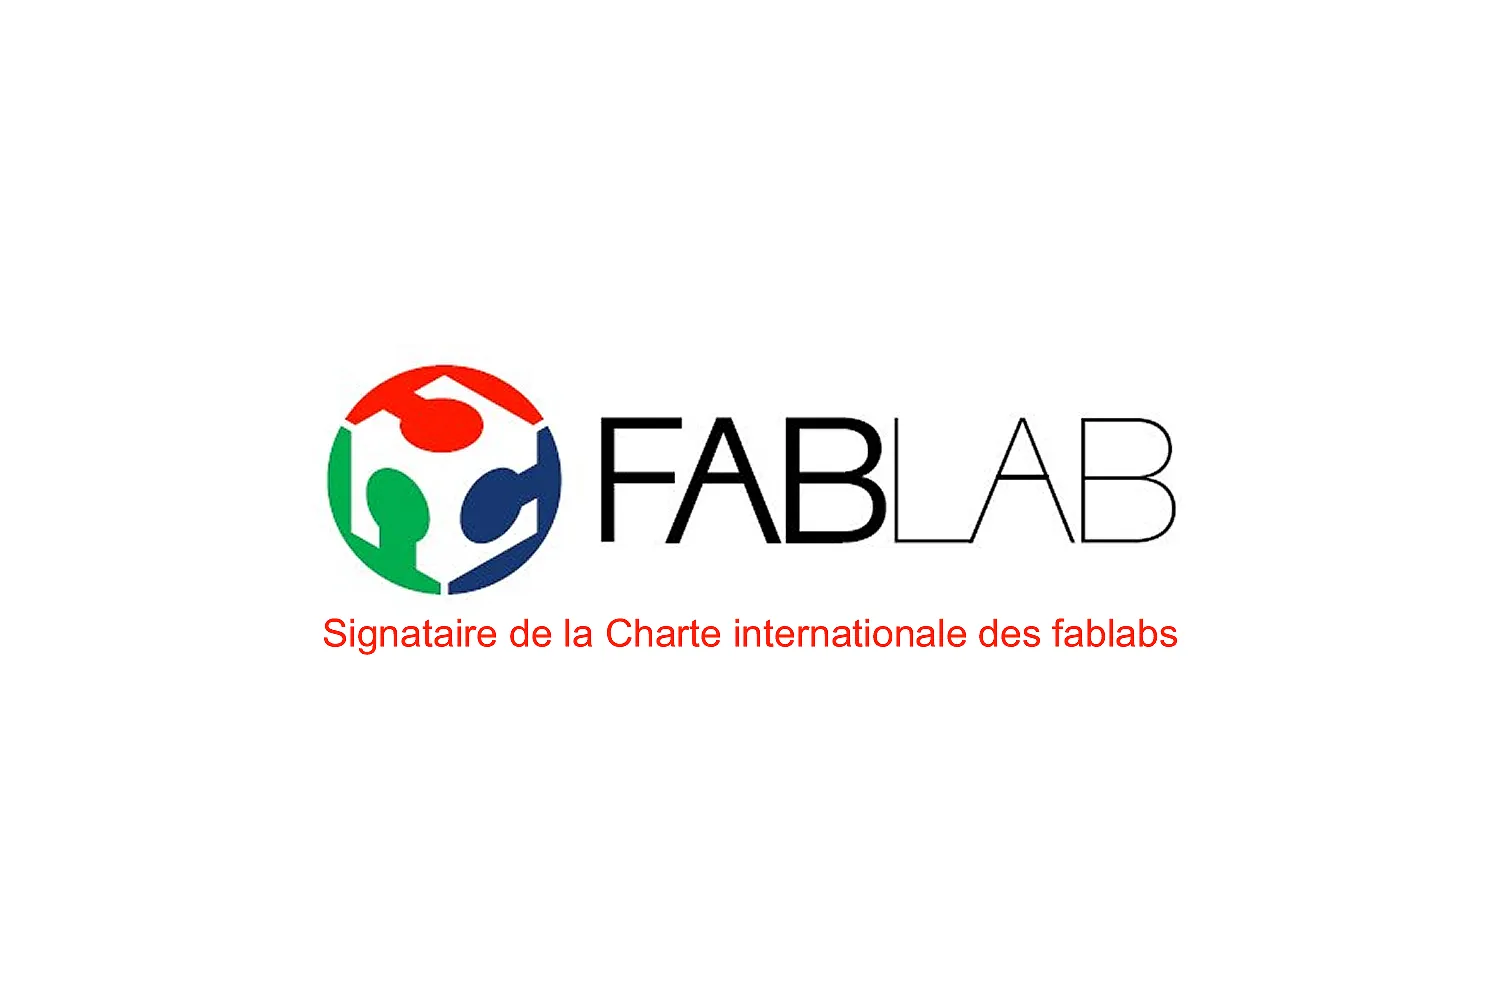 Image - Jeff - Charte Fablabs Internationale